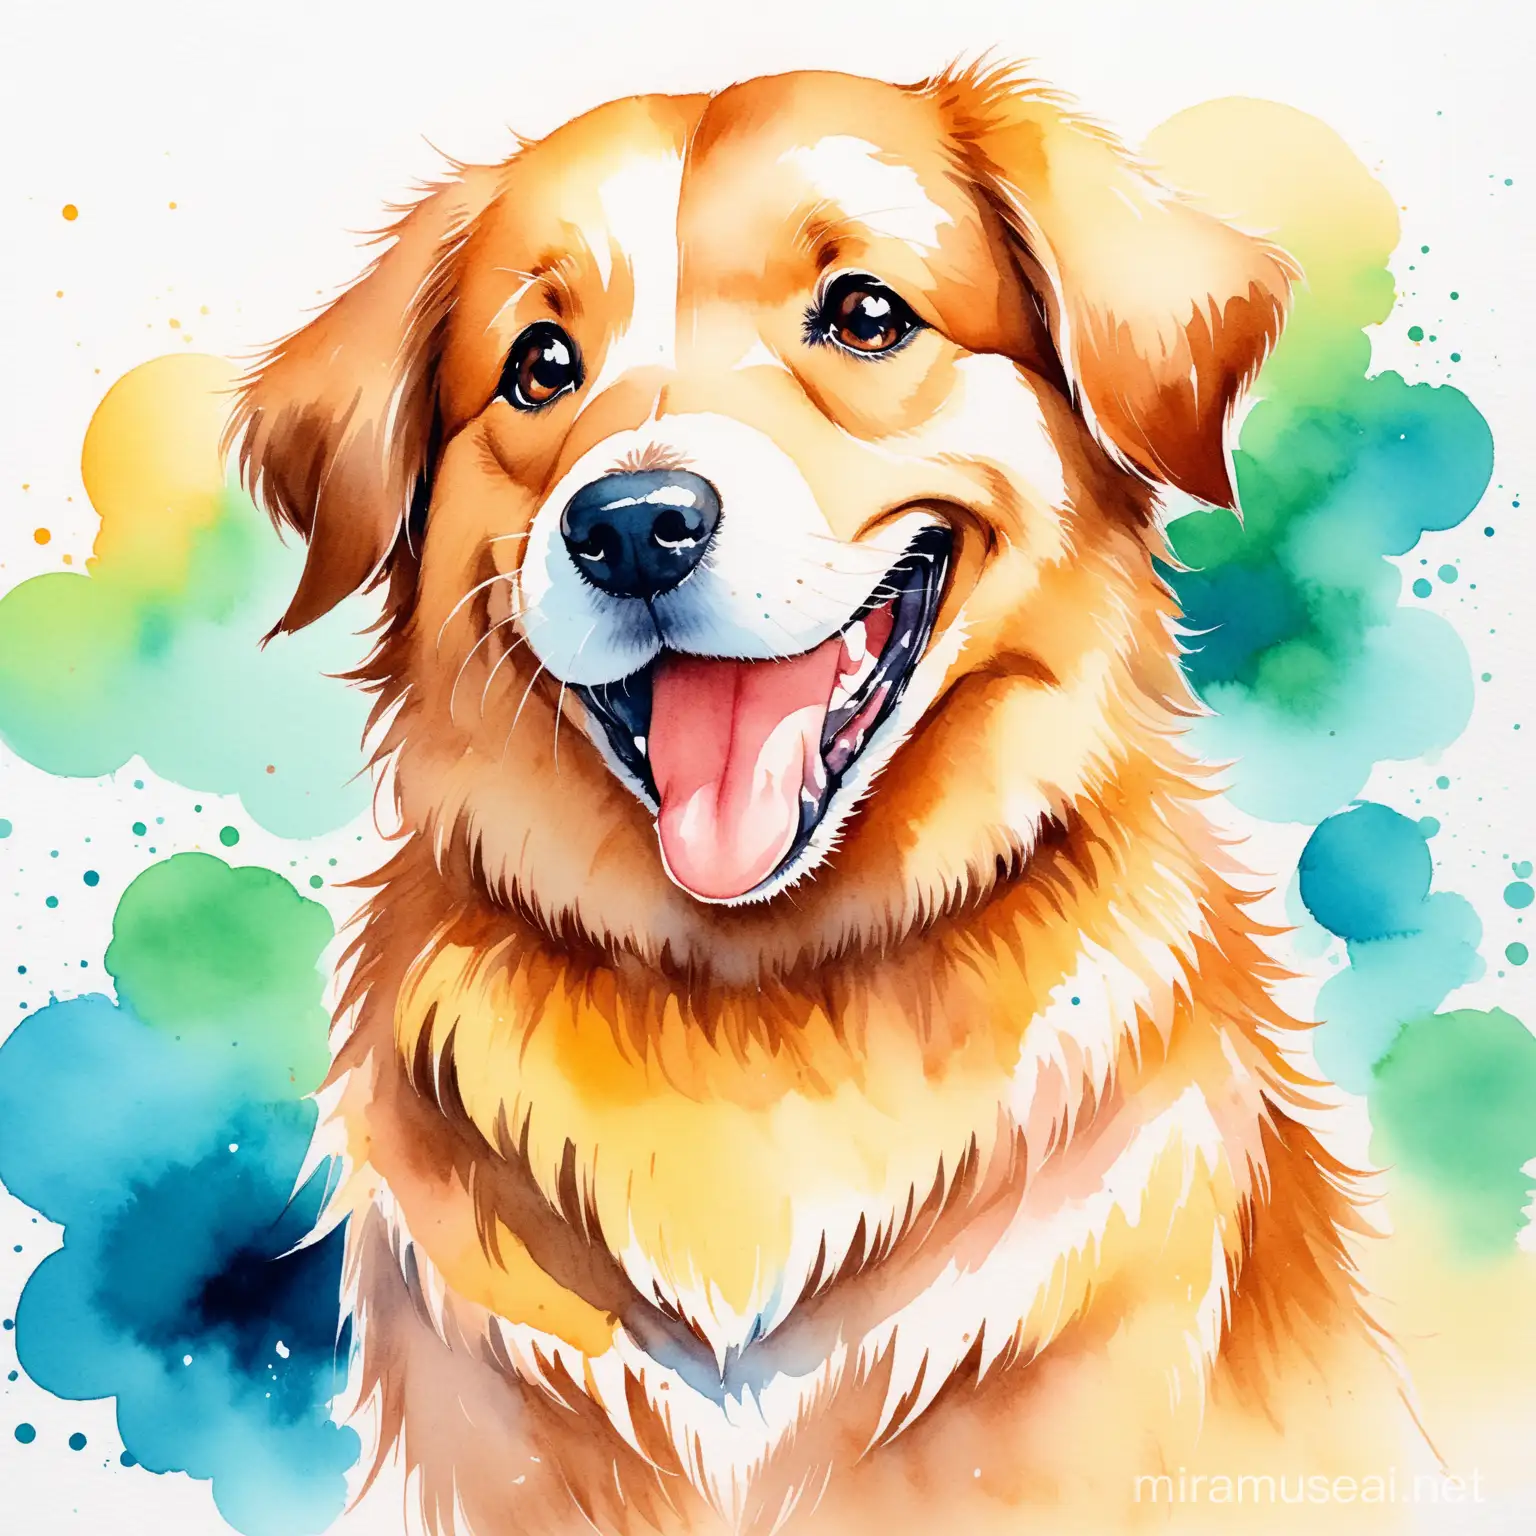 Joyful Dog Watercolor and Ink Illustration Art